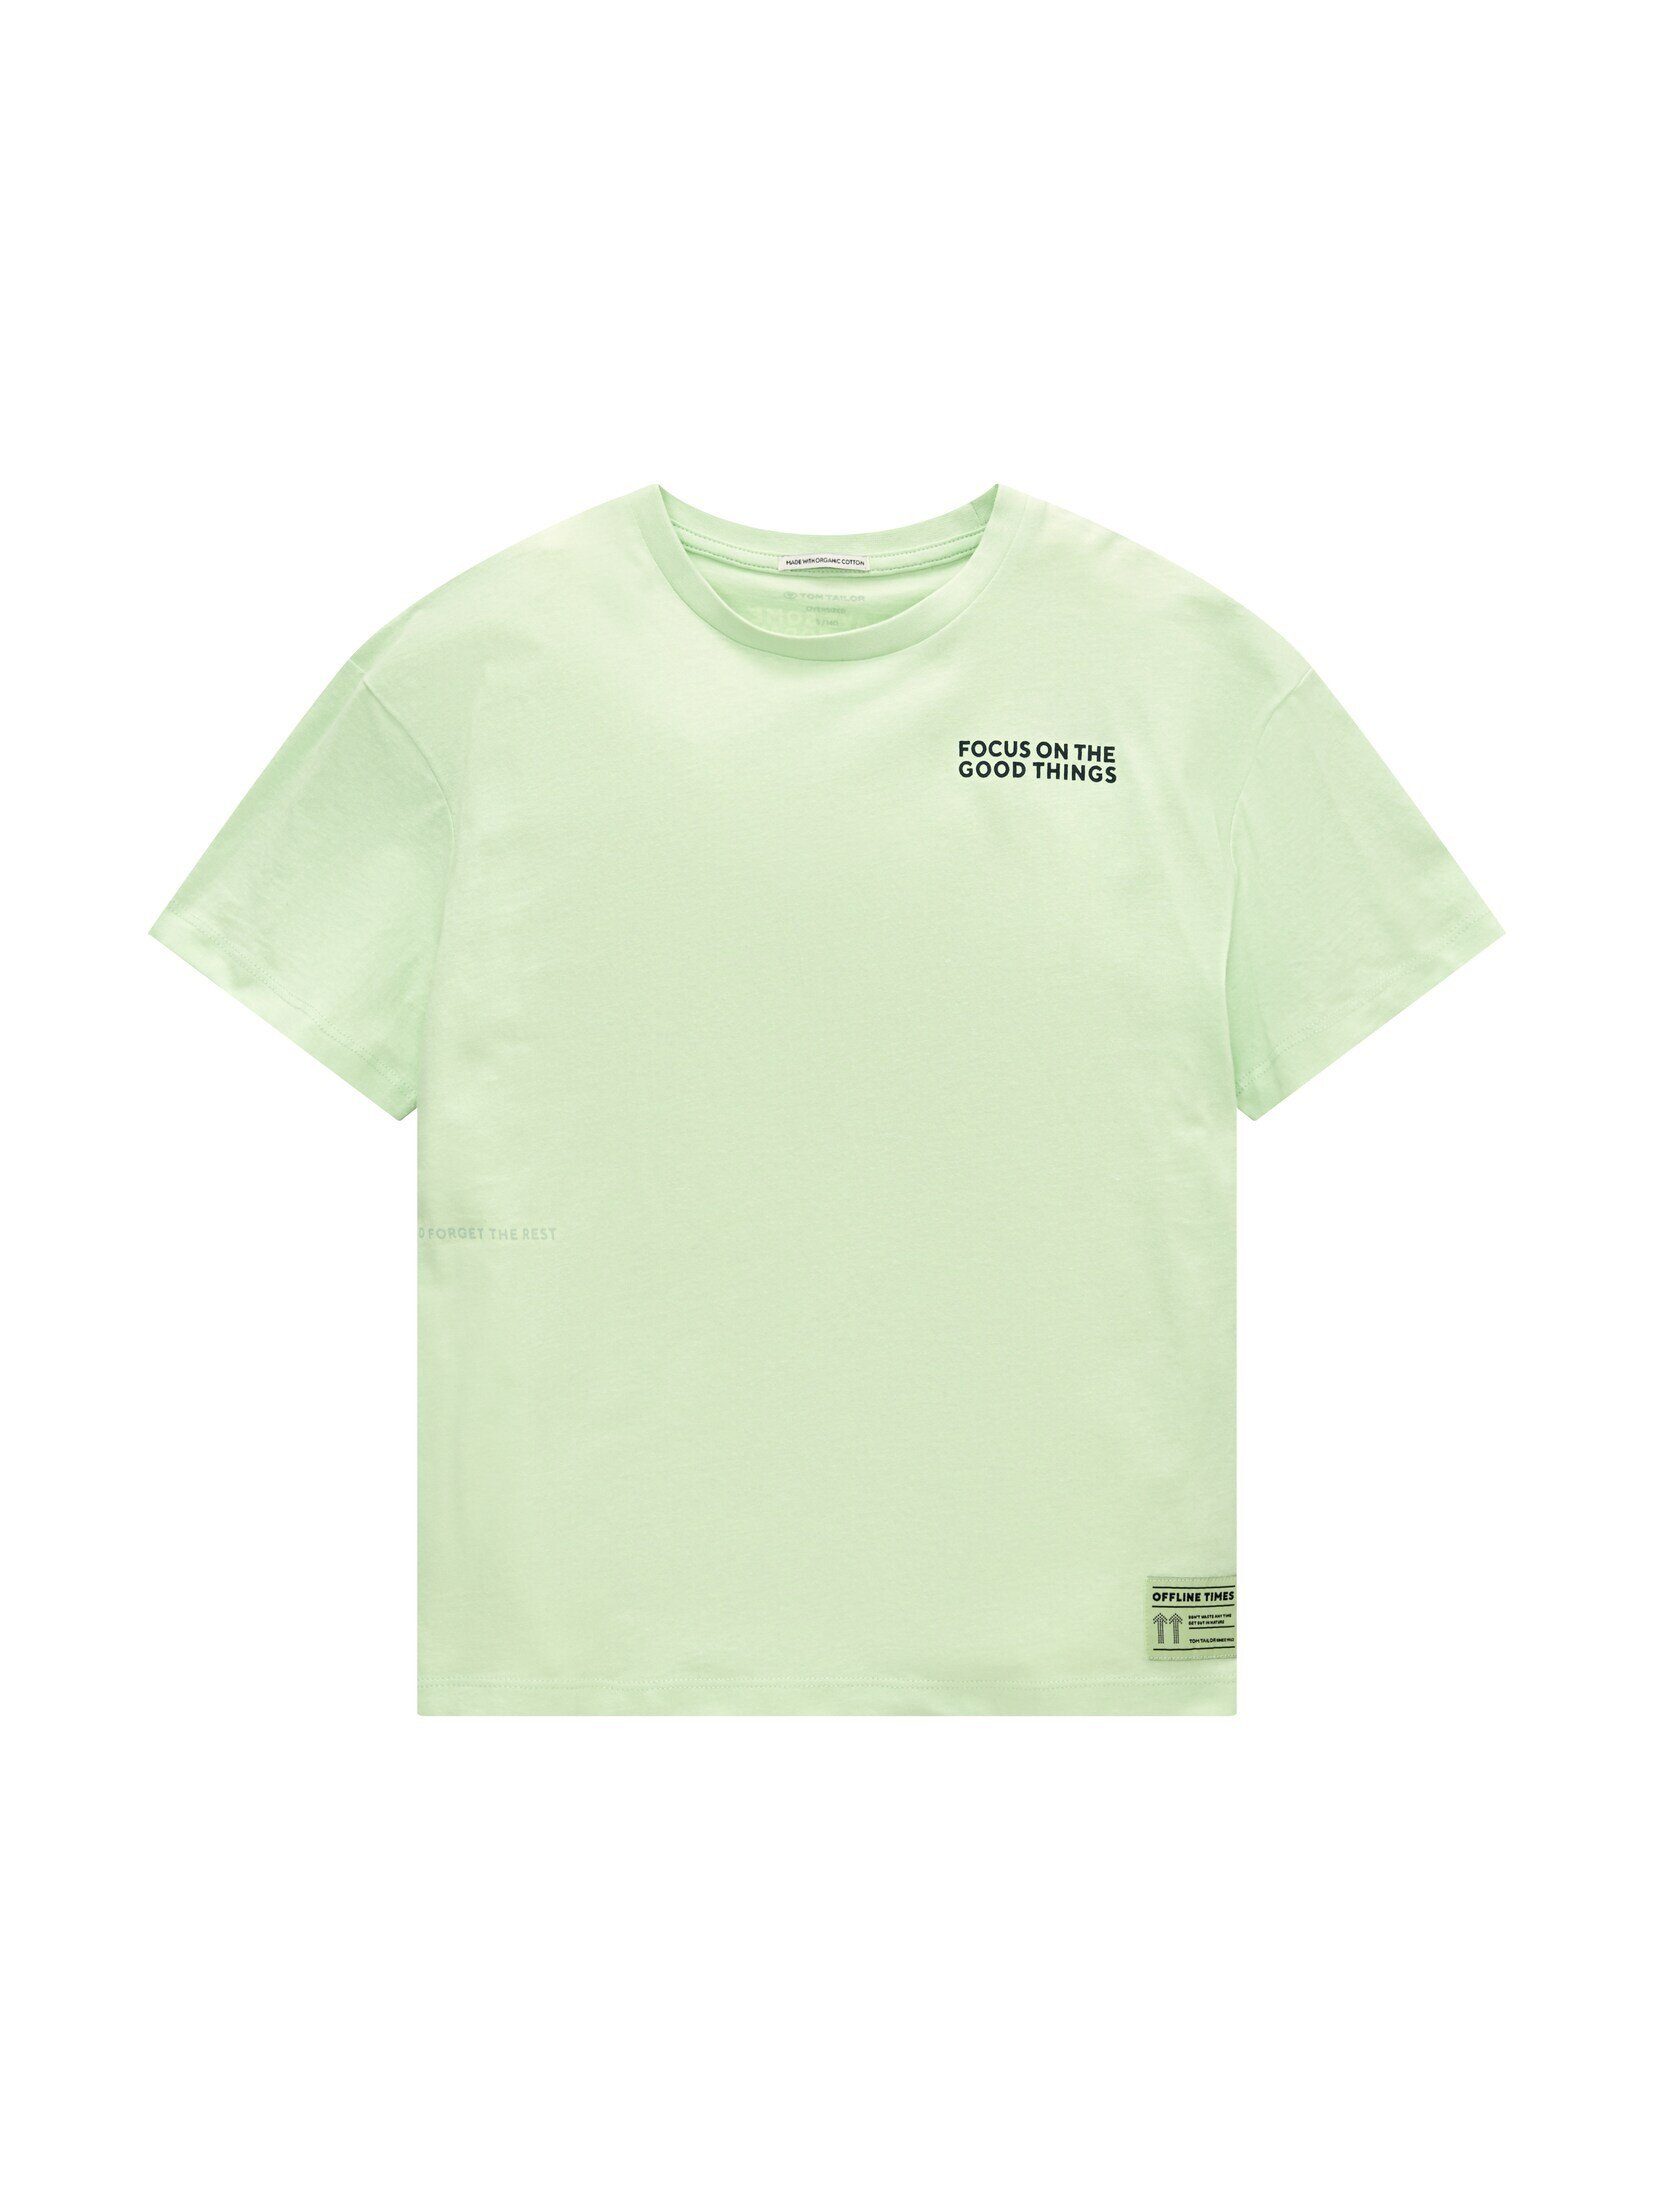 TAILOR lime T-Shirt mit green T-Shirt Textprint apple fresh TOM